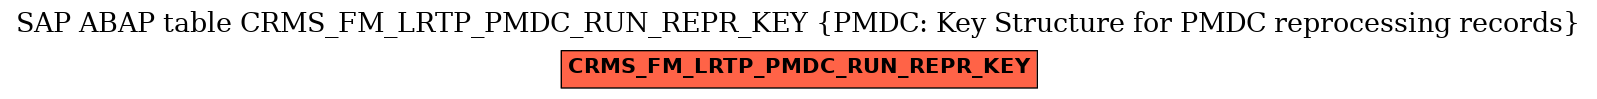 E-R Diagram for table CRMS_FM_LRTP_PMDC_RUN_REPR_KEY (PMDC: Key Structure for PMDC reprocessing records)